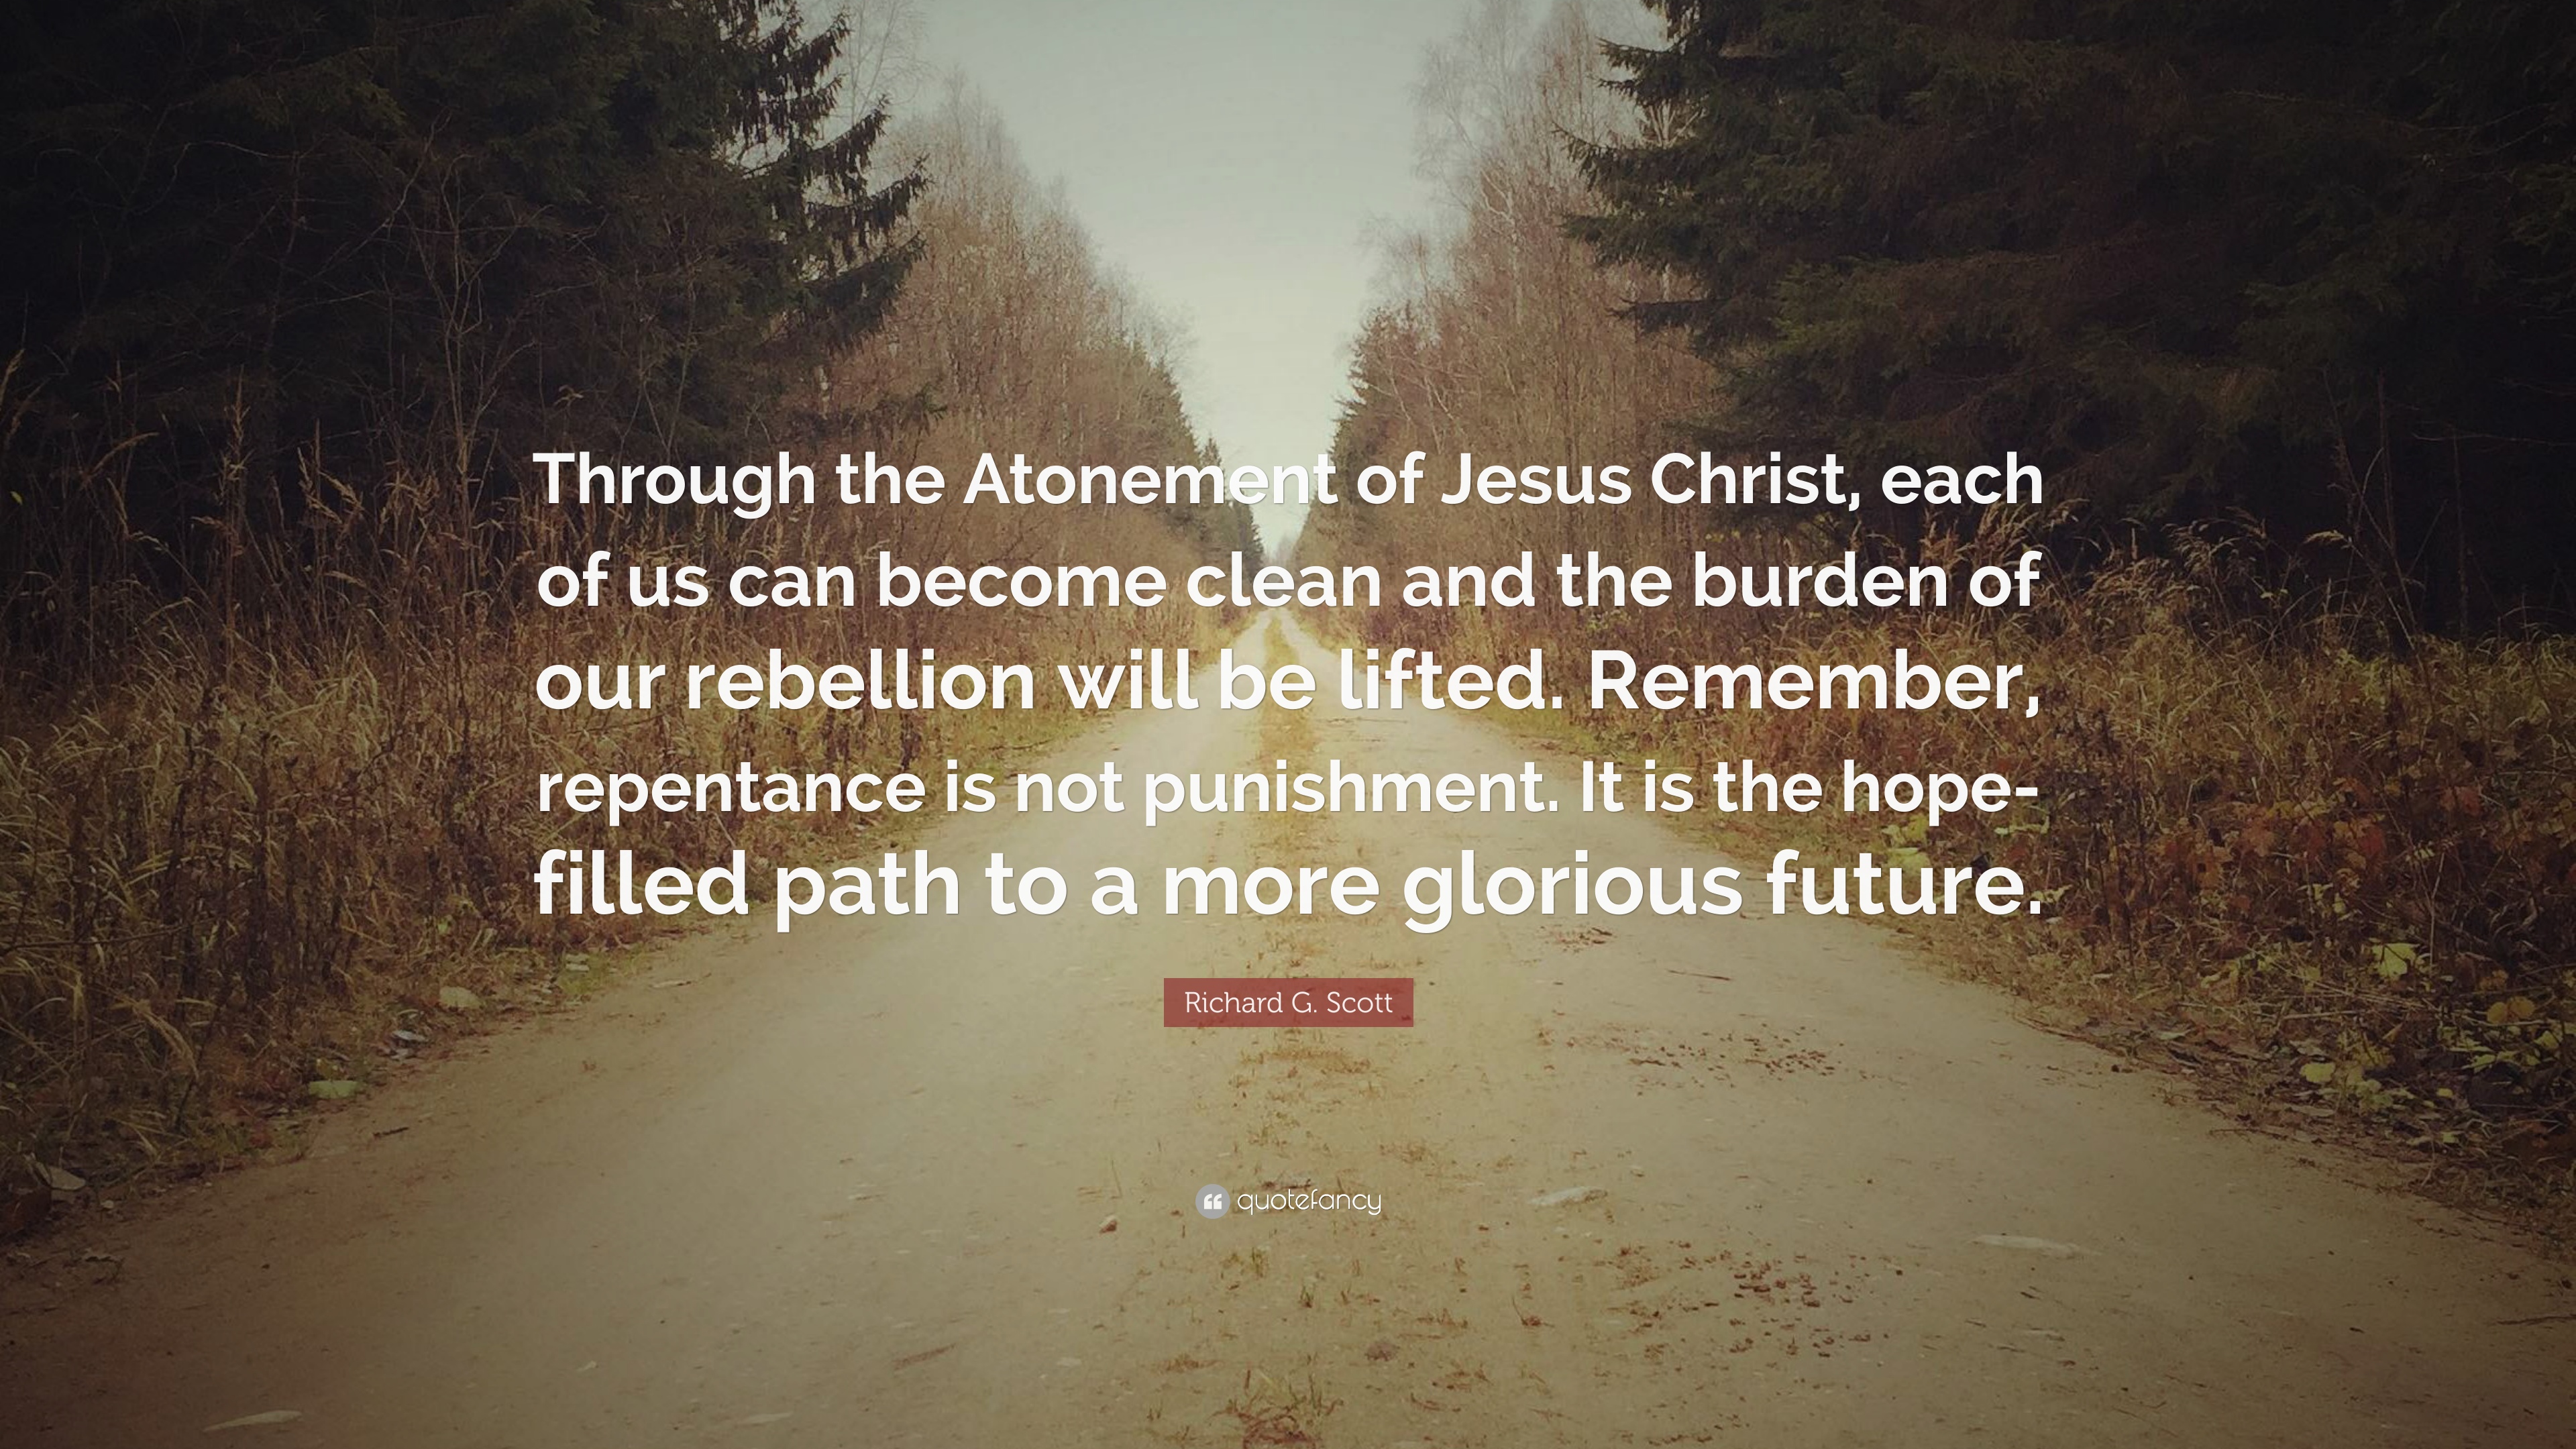 Richard G. Scott Quote: “Through the Atonement of Jesus Christ, each ...